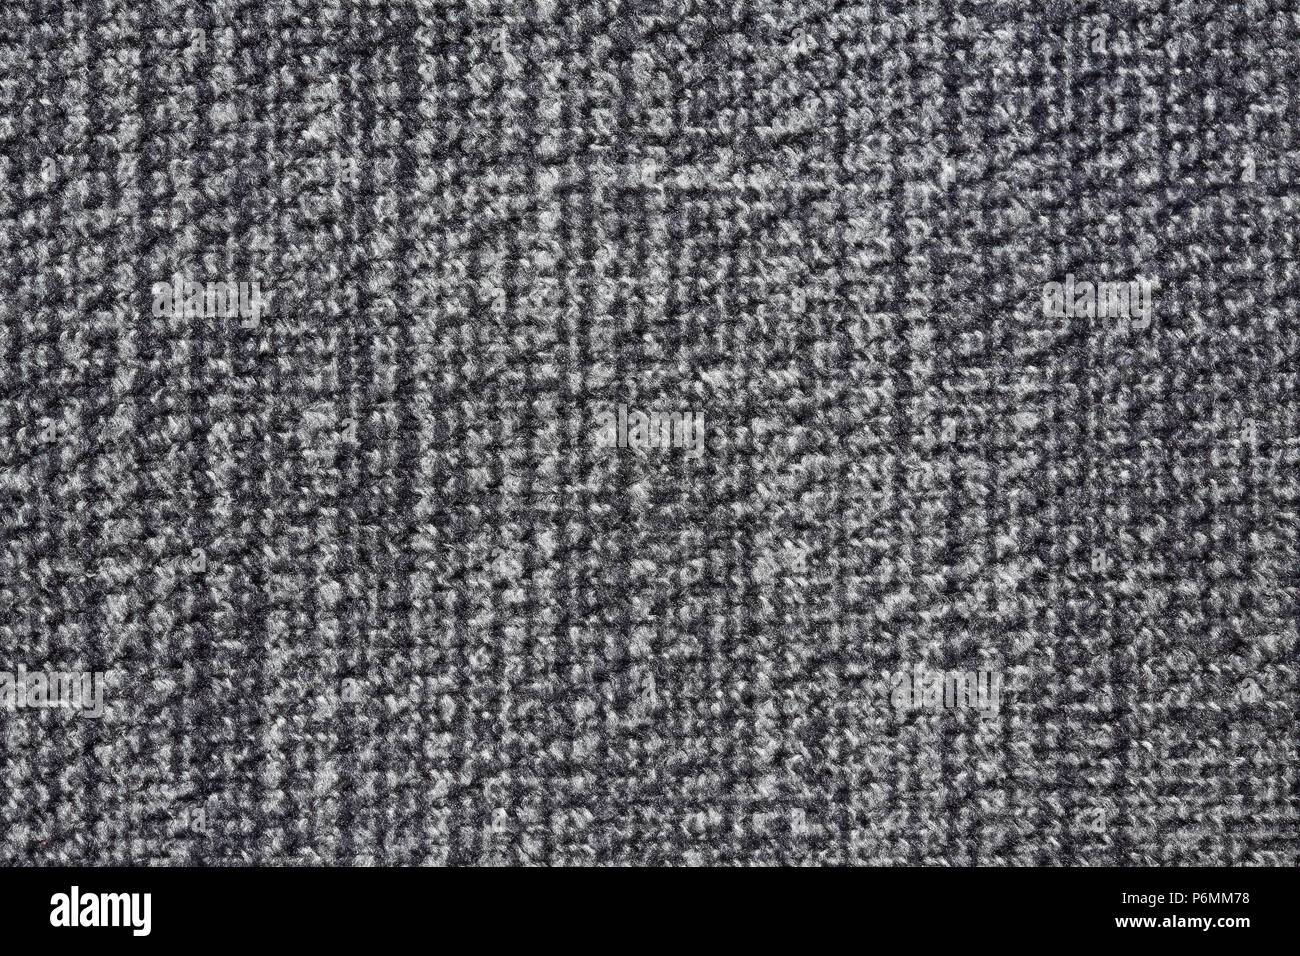 Superlative grey fabric texture. High resolution photo. Stock Photo